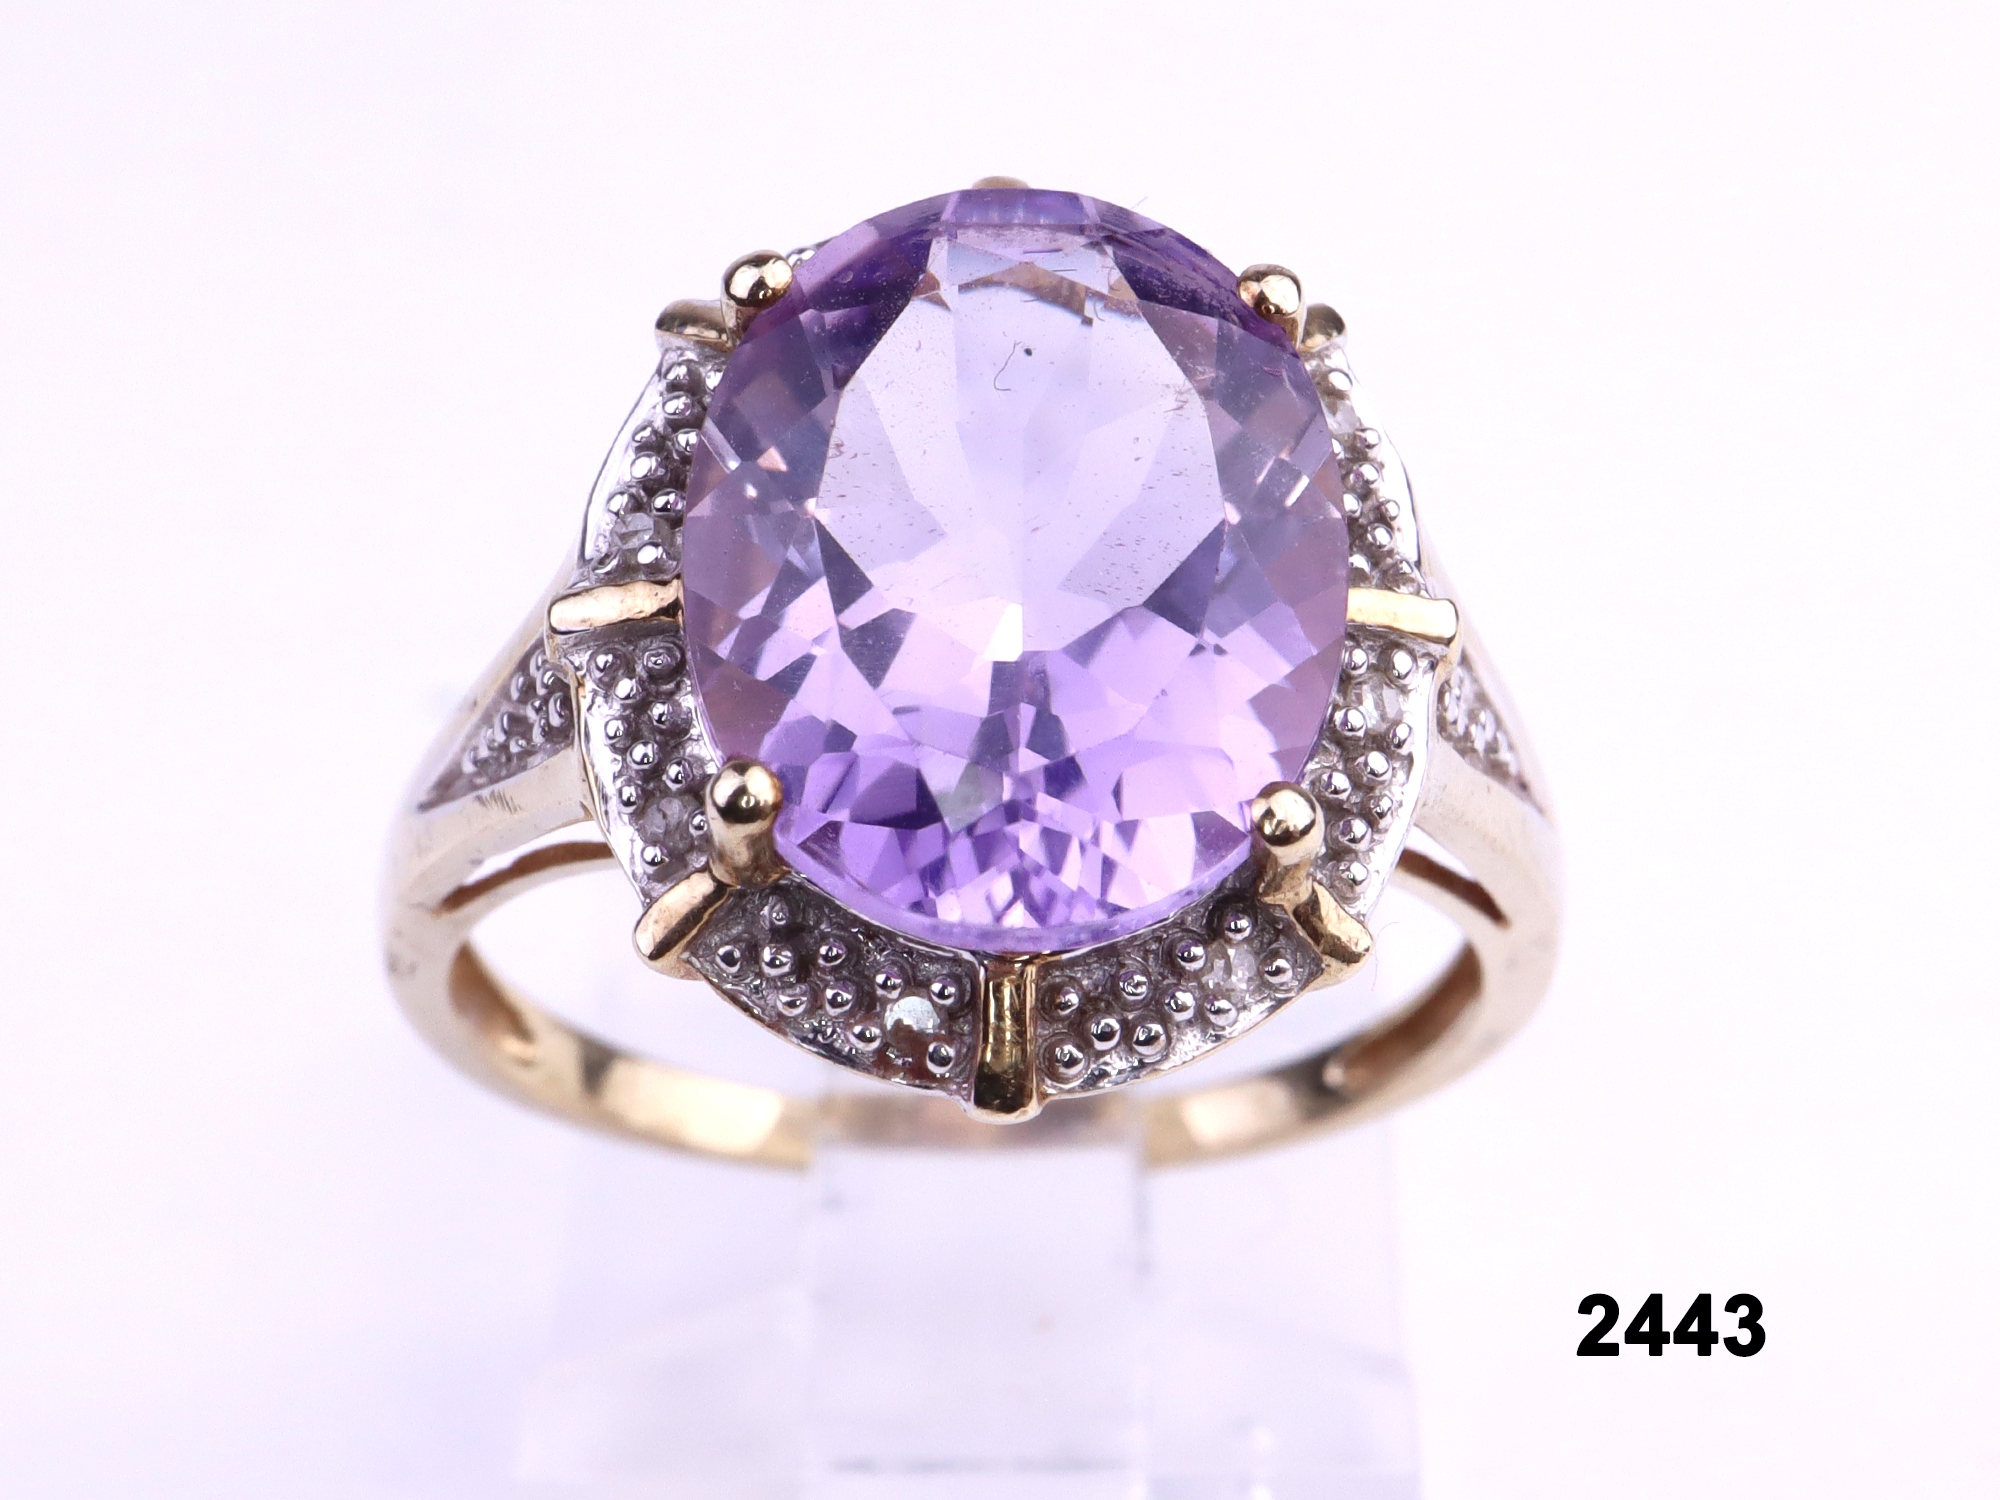 9 carat Lilac Amethyst Ring